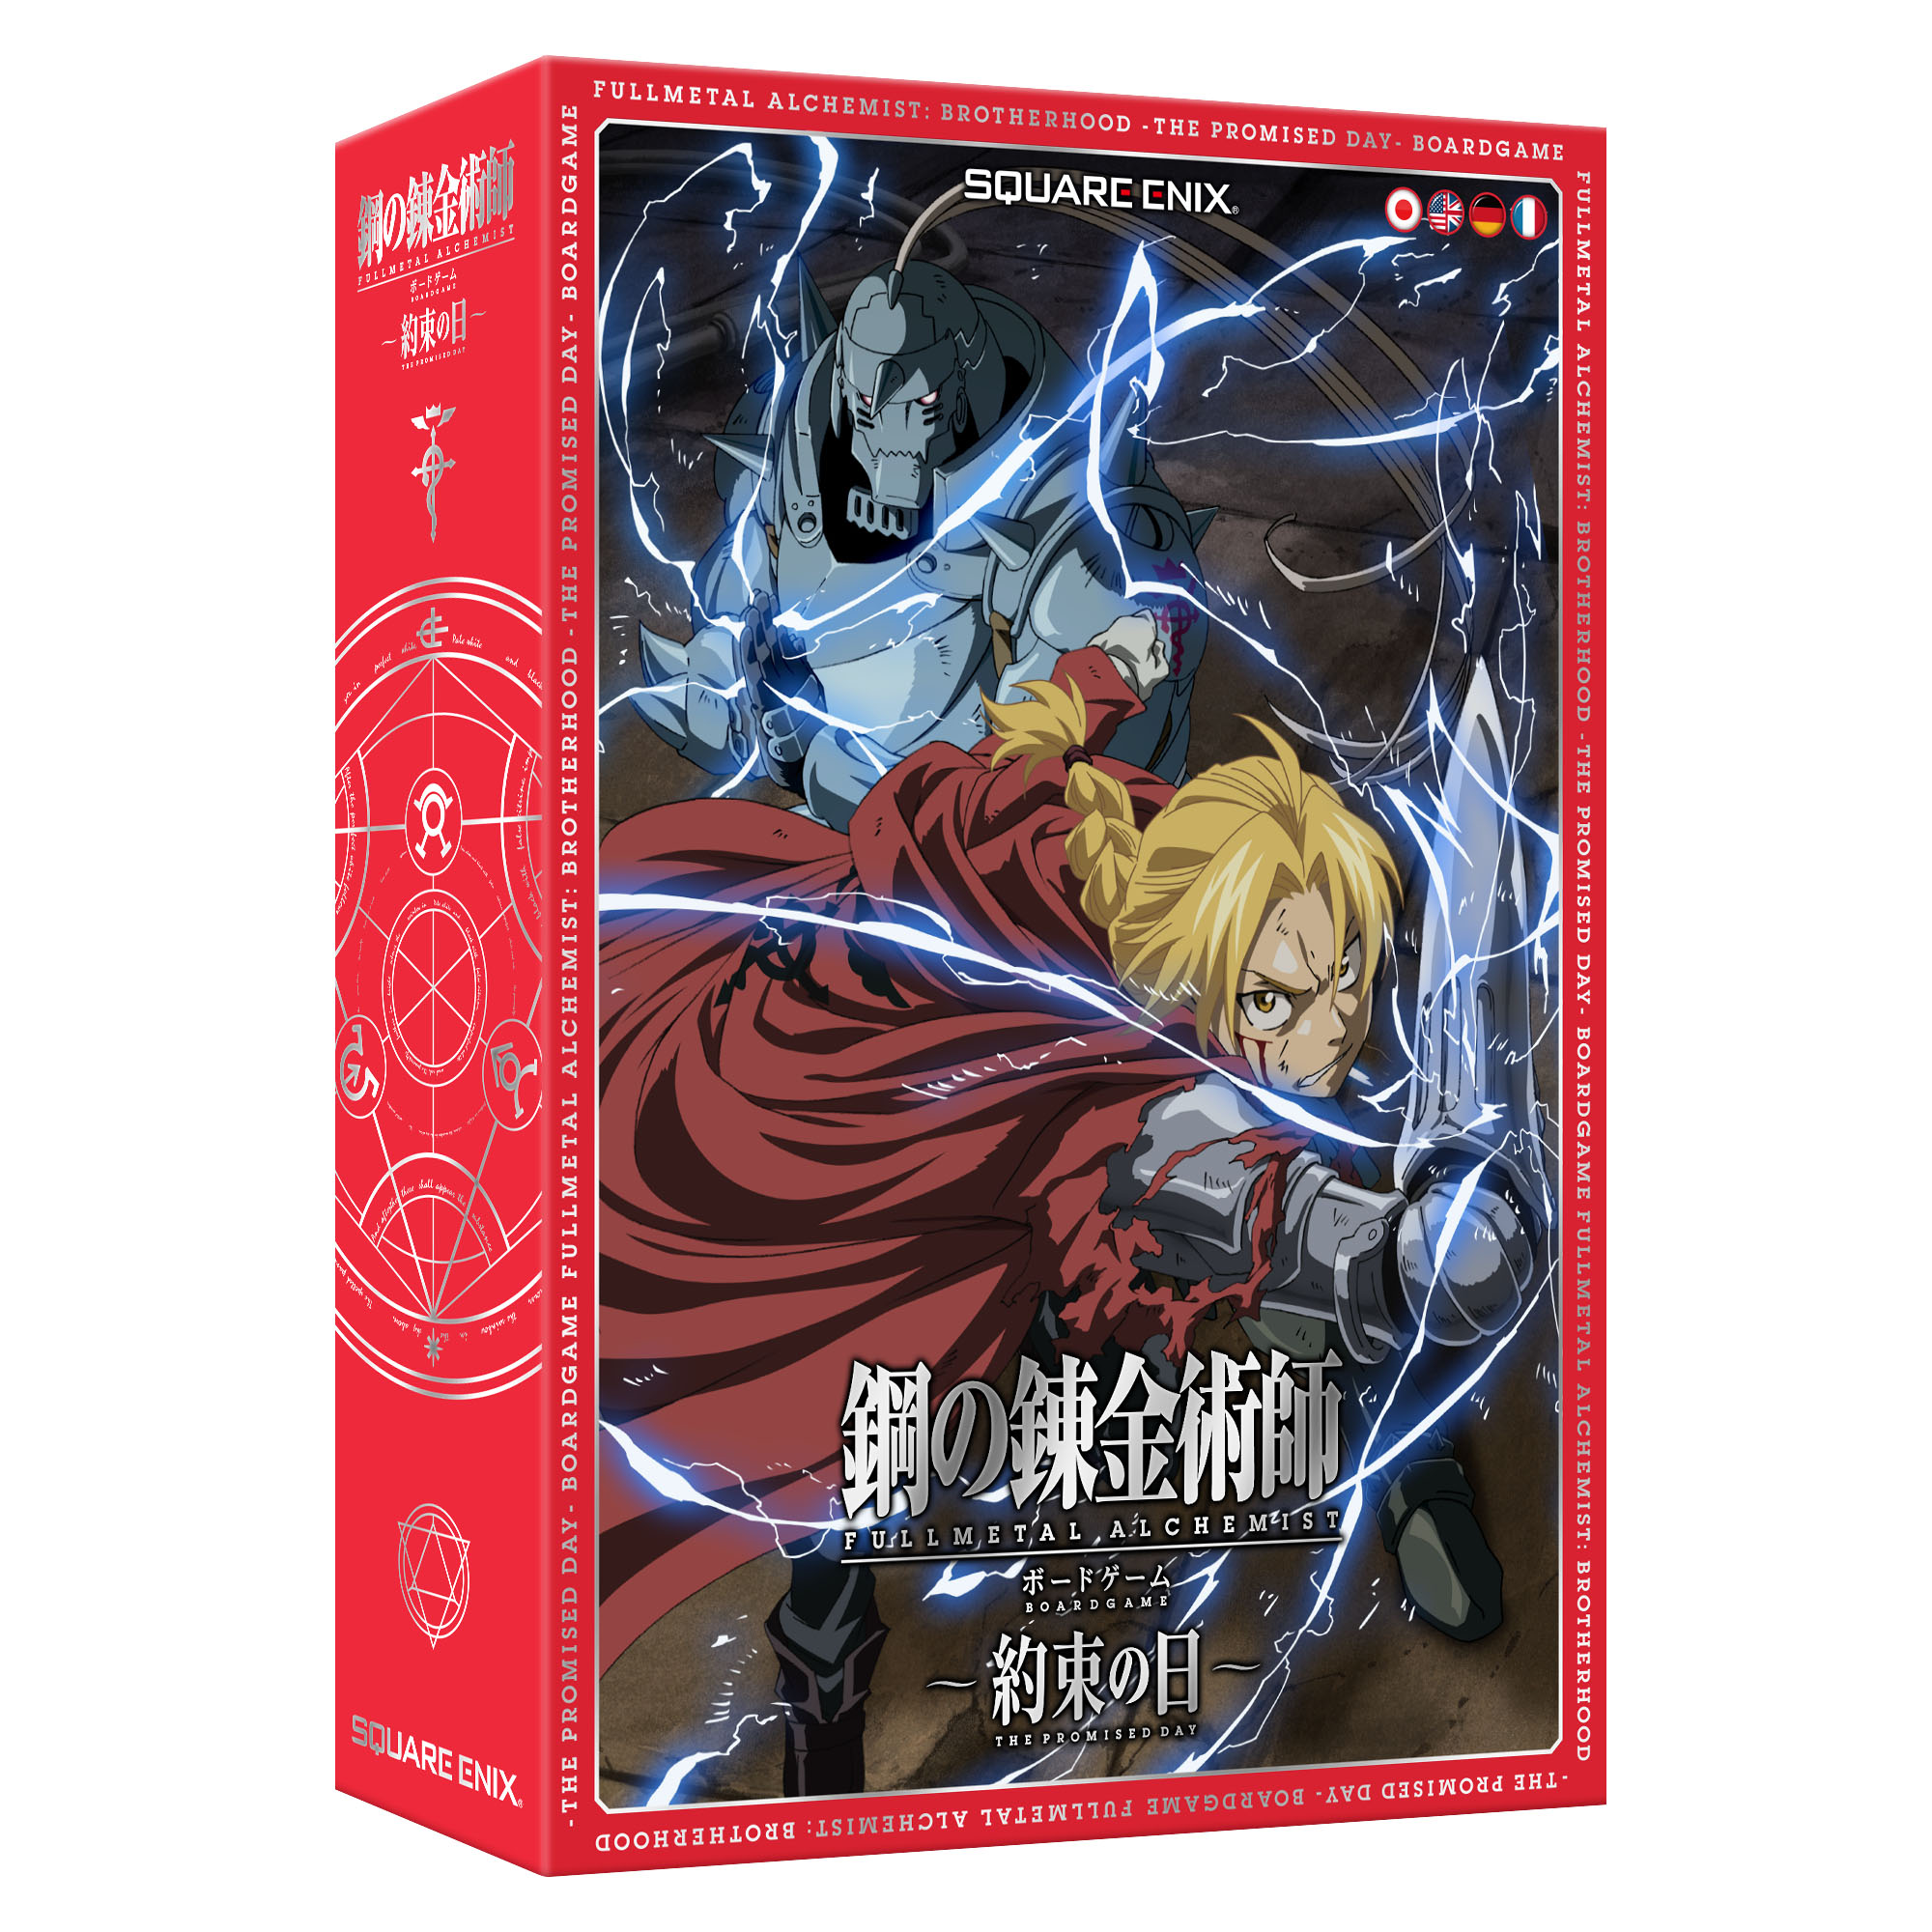 Fullmetal Alchemist 20th ANNIVERSARY Art Book Limited Japan Anime Manga JP 190P